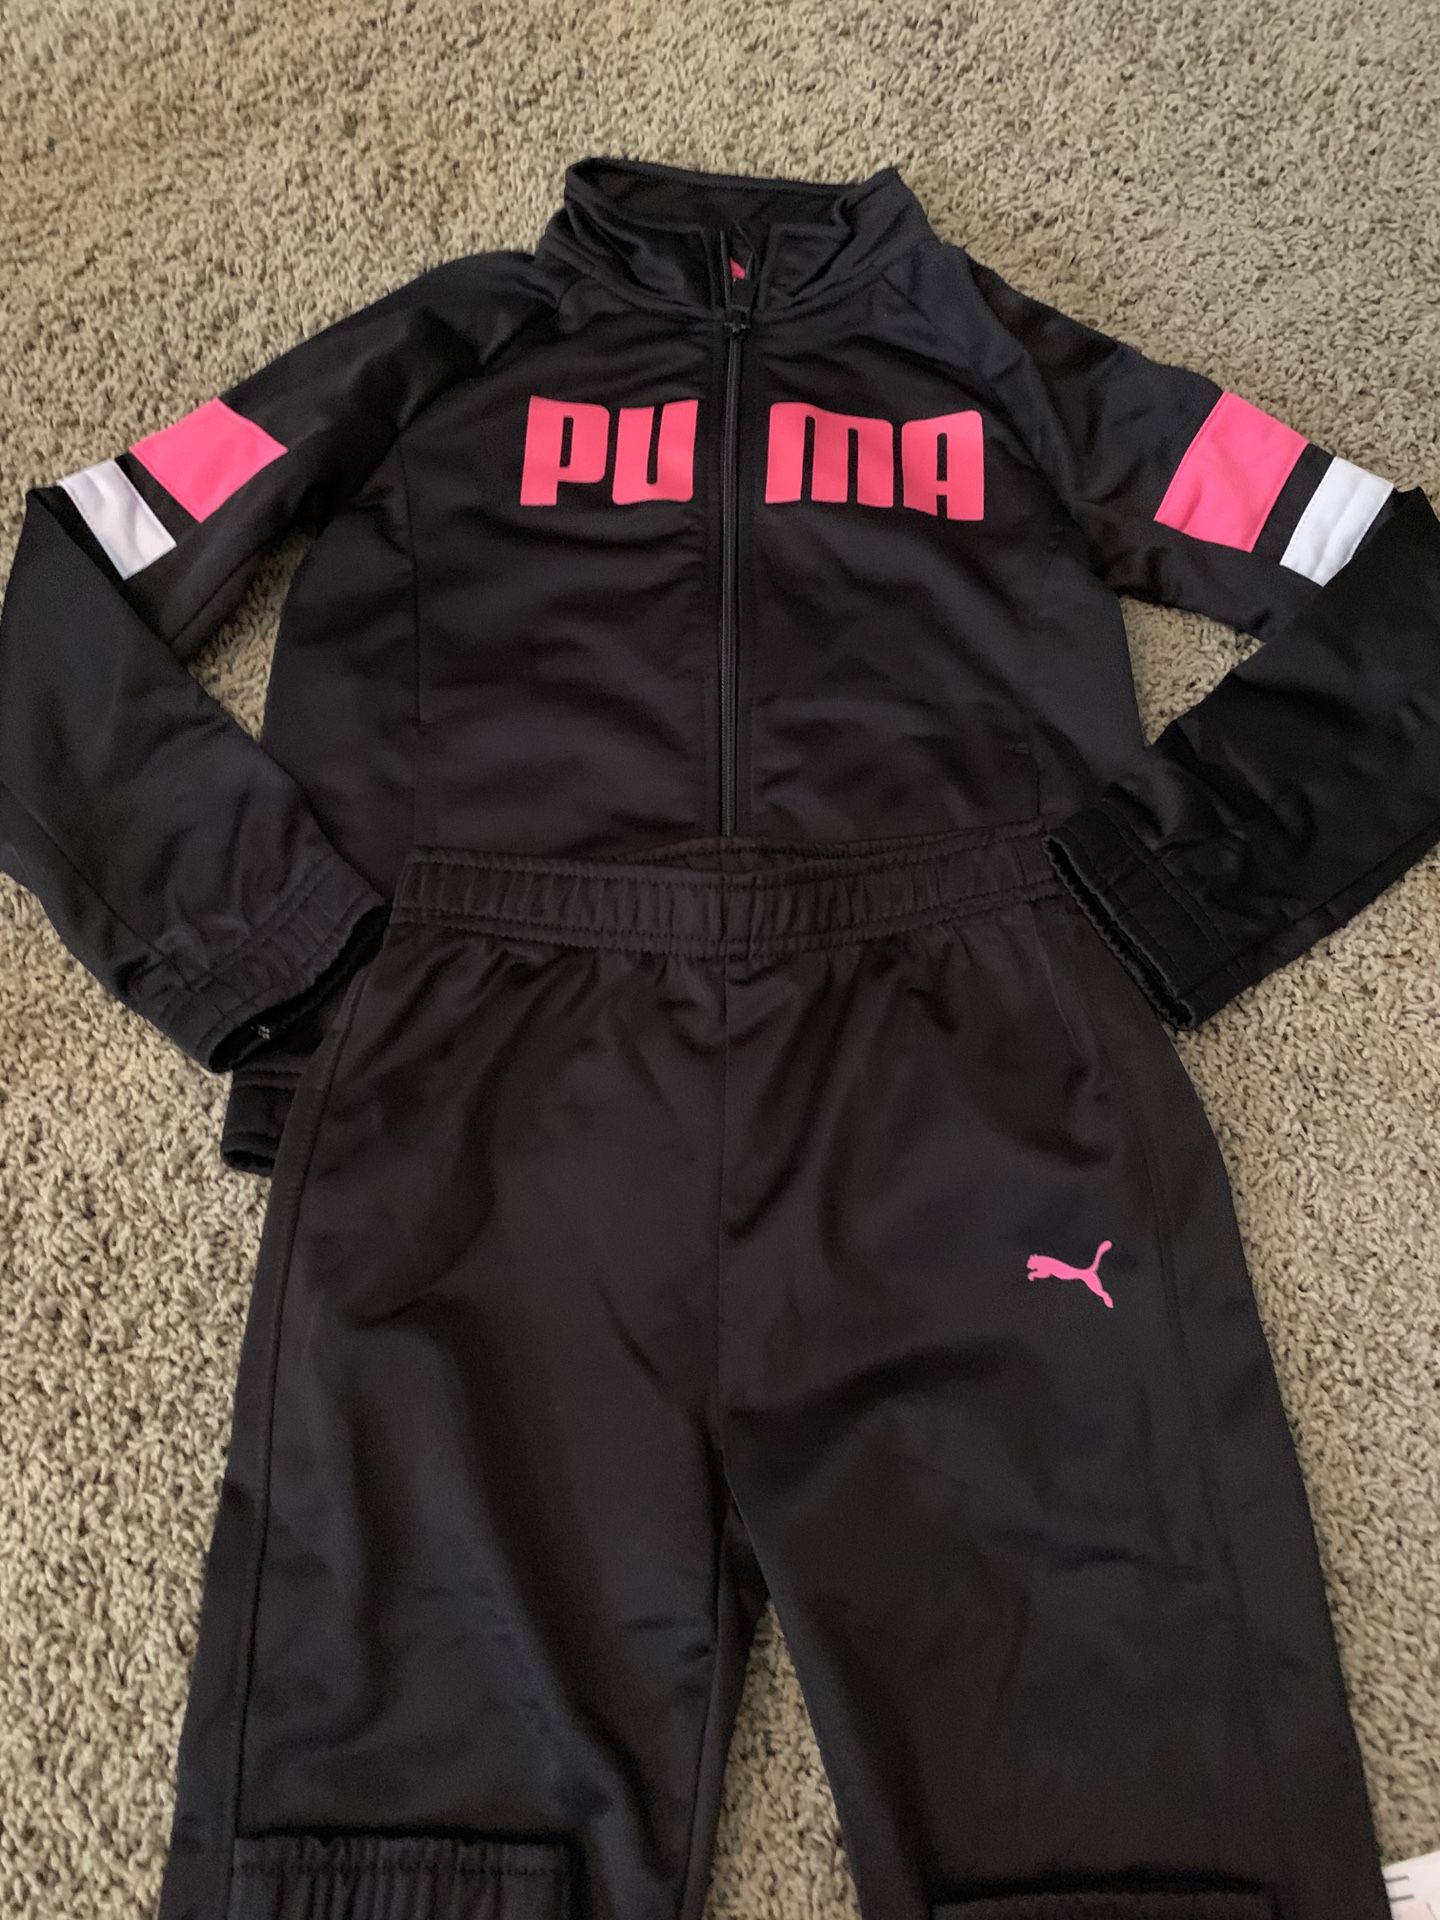 Puma kids track suit set size youth 6